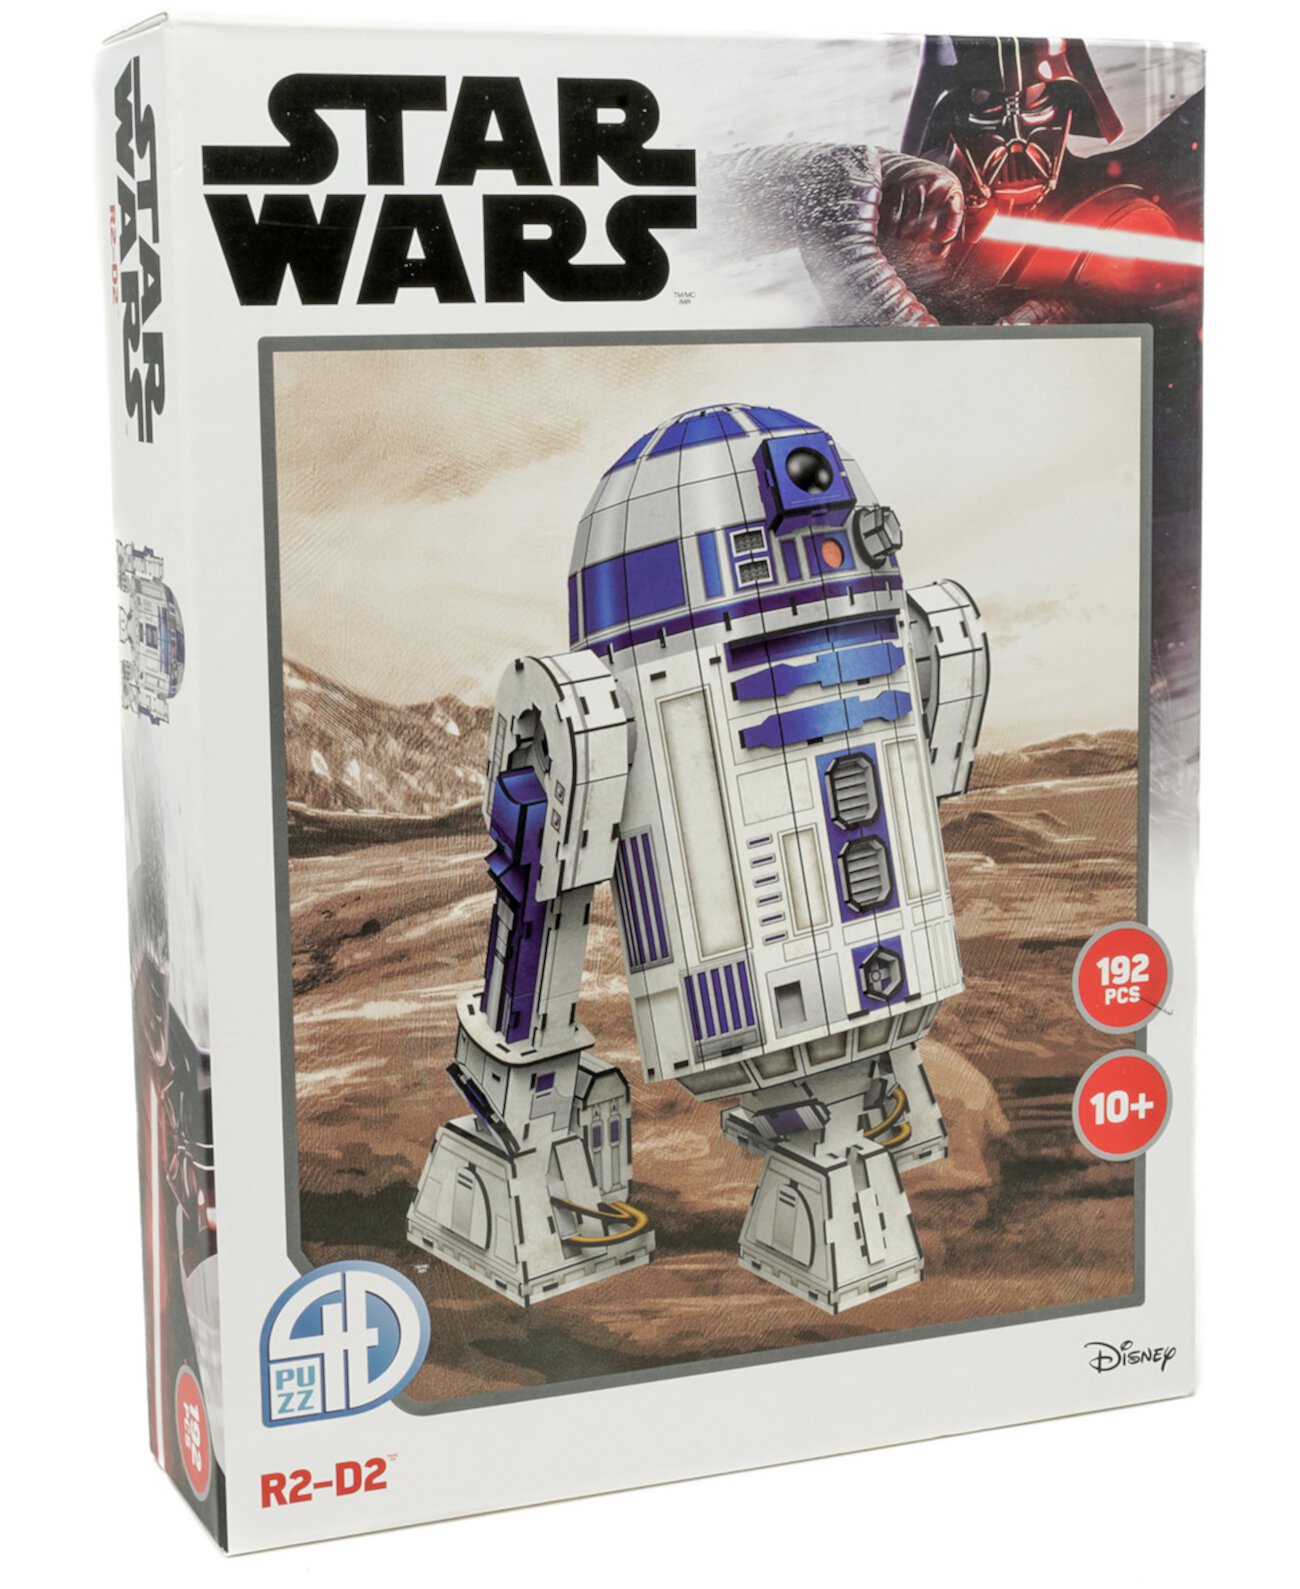 Набор бумажных моделей Star Wars R2D2, 192 предмета 4D Cityscape